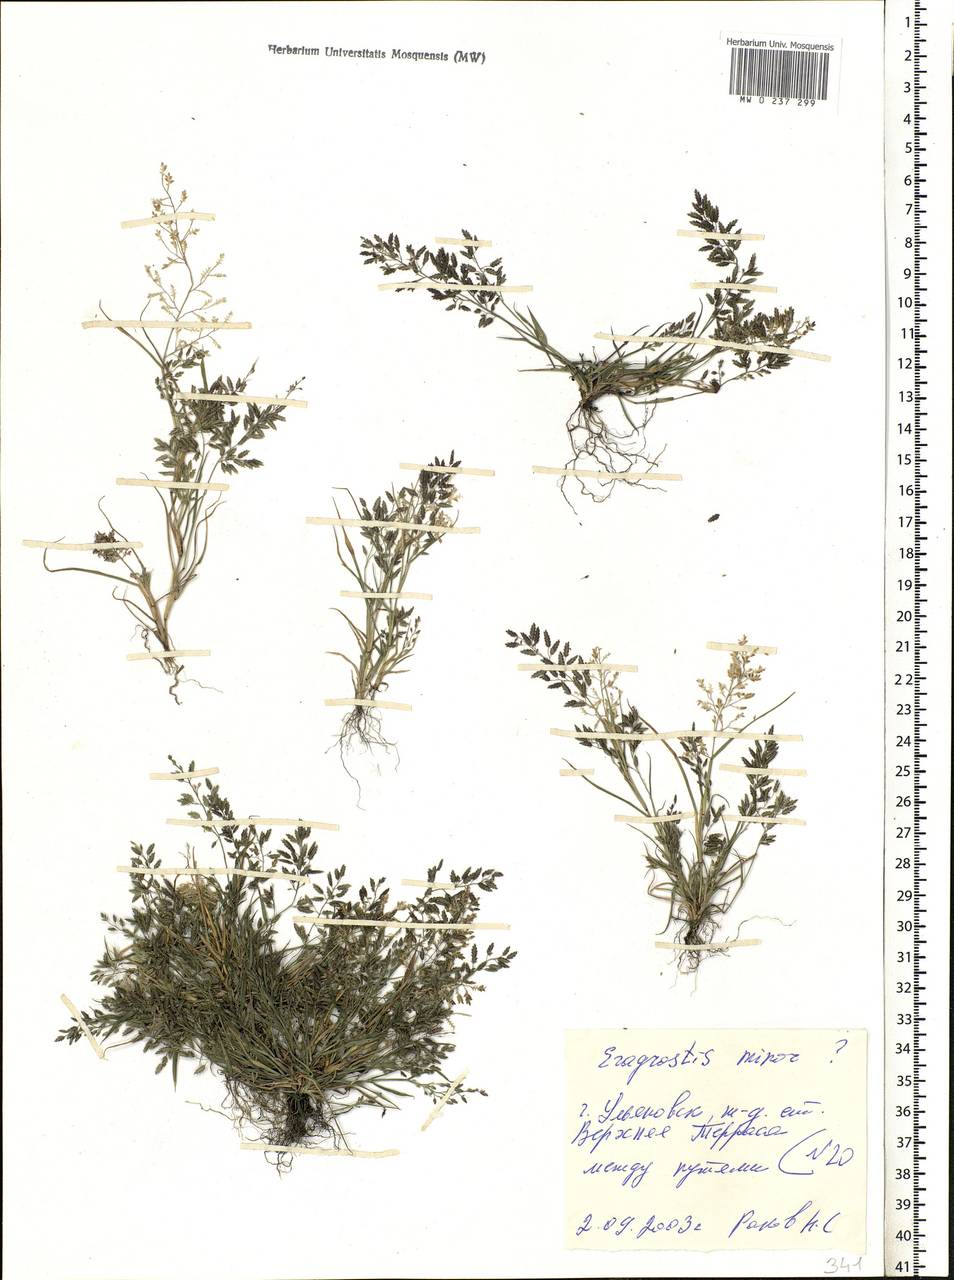 Eragrostis minor Host, Eastern Europe, Middle Volga region (E8) (Russia)